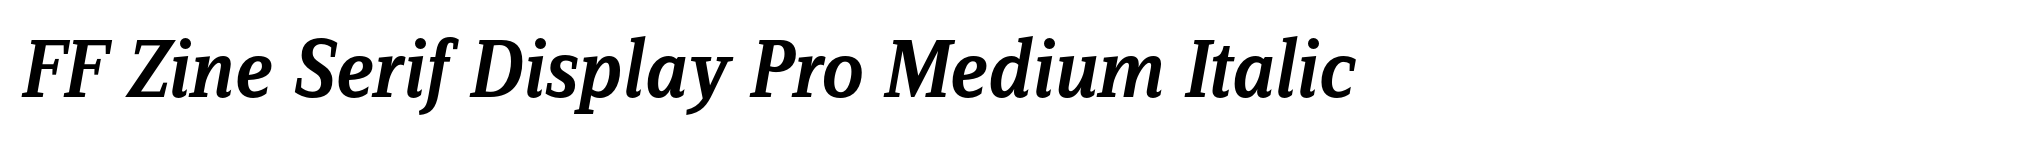 FF Zine Serif Display Pro Medium Italic image